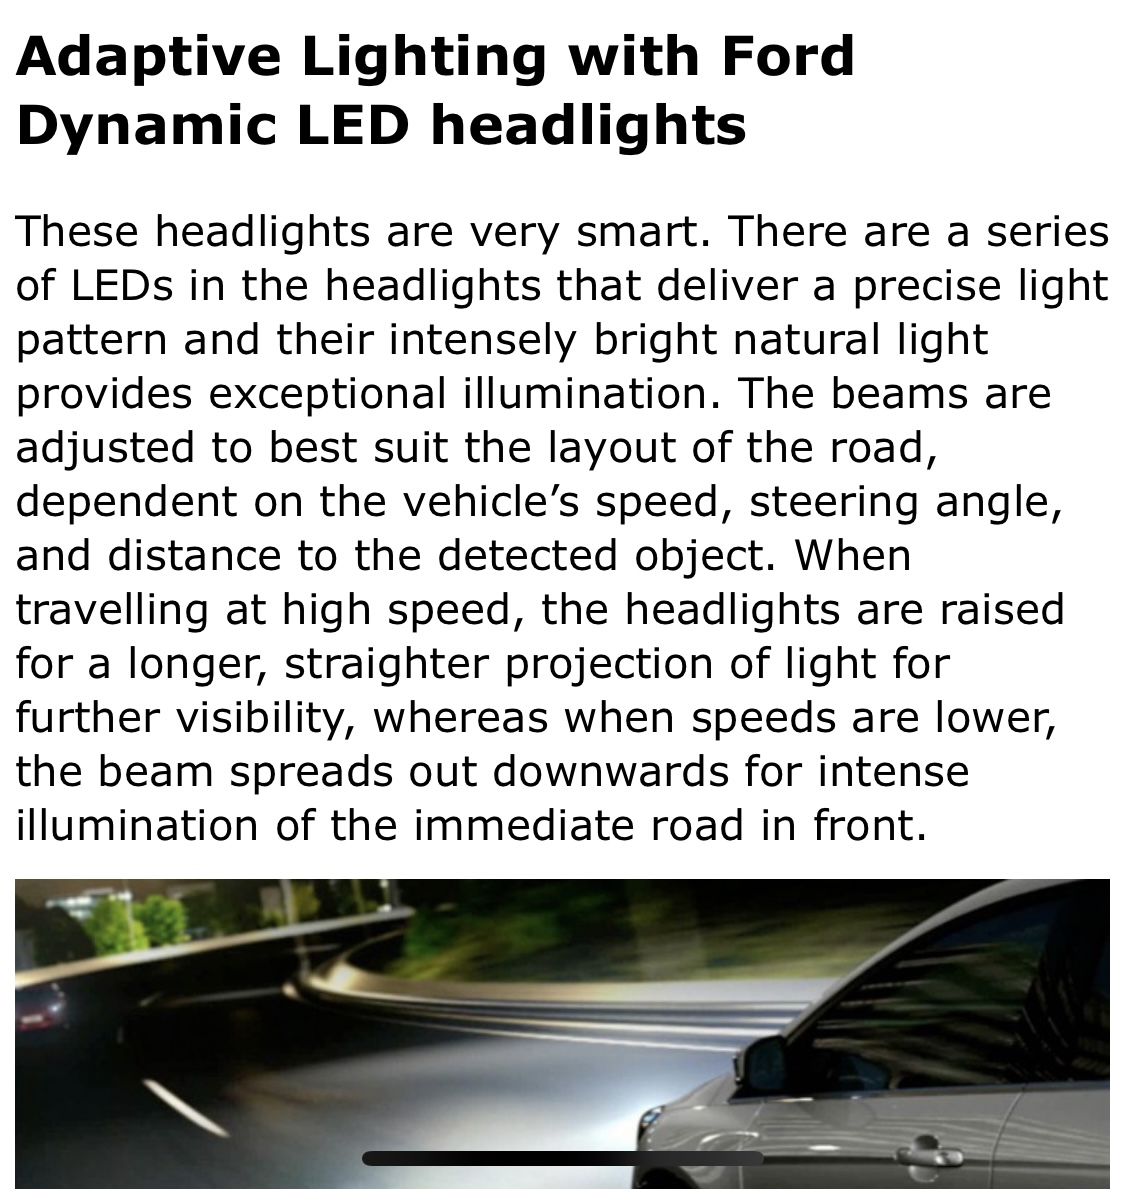 Ford F-150 Headlight Ratings 6F174A13-FC3D-474B-AED3-CFA43AE3F879